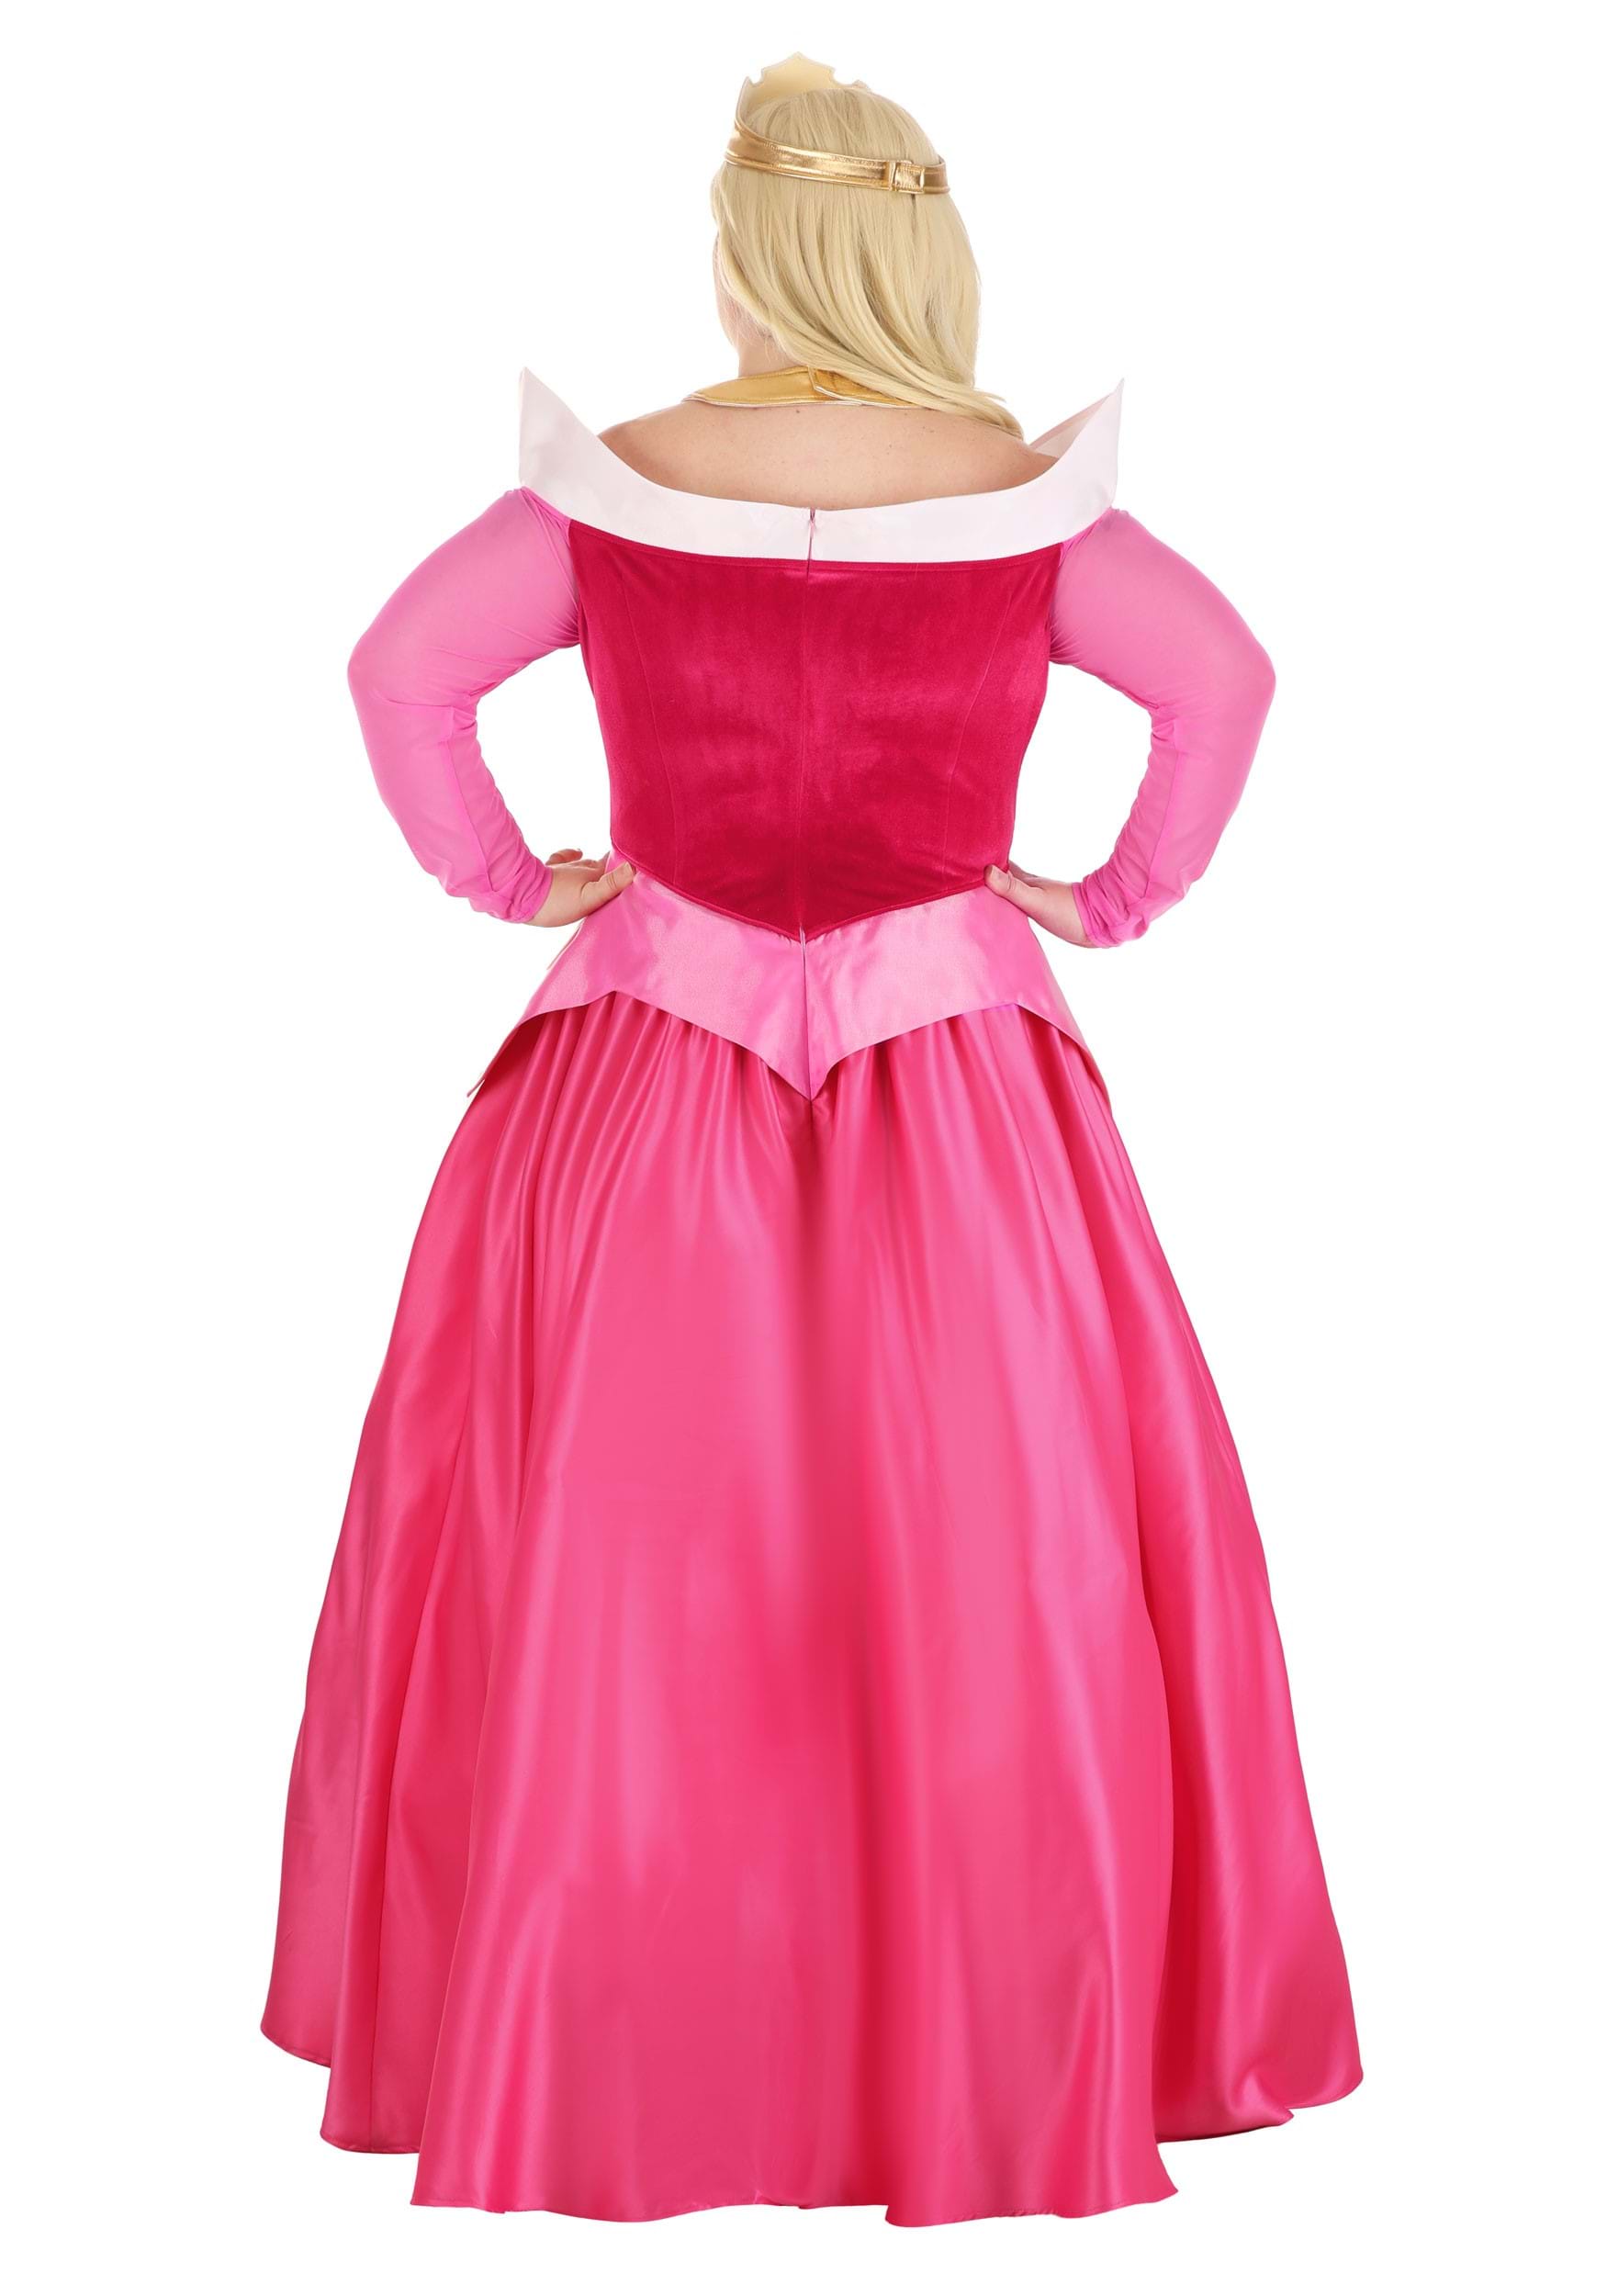 Plus Size Premium Disney Aurora Sleeping Beauty Costume For Women 